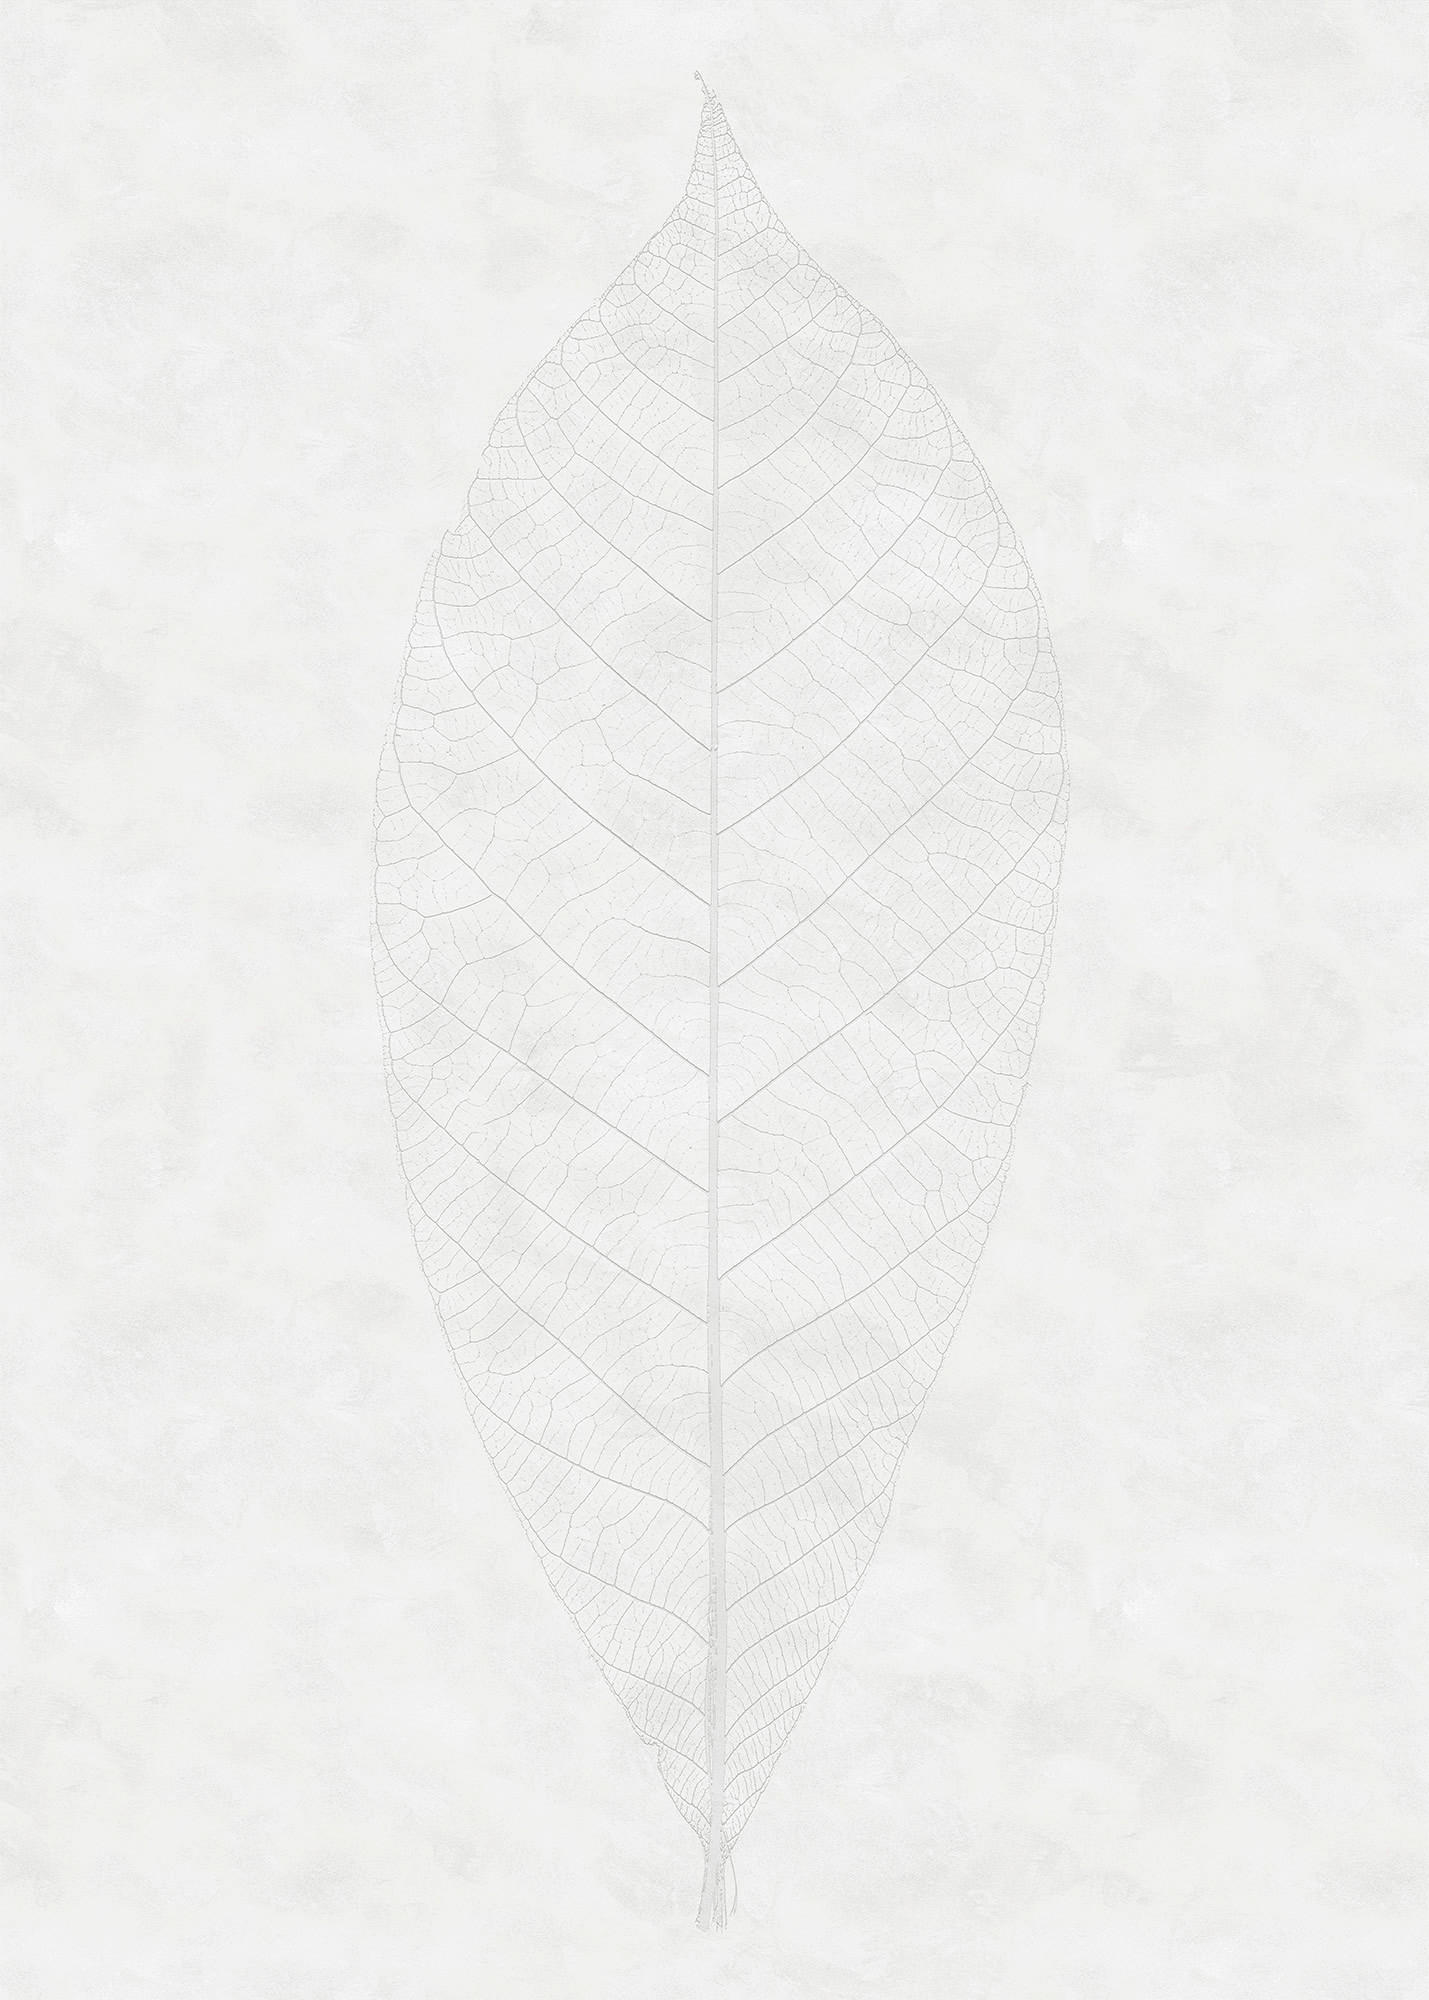 FOTOTAPETE  - Weiß/Grau, Trend (200/280cm)